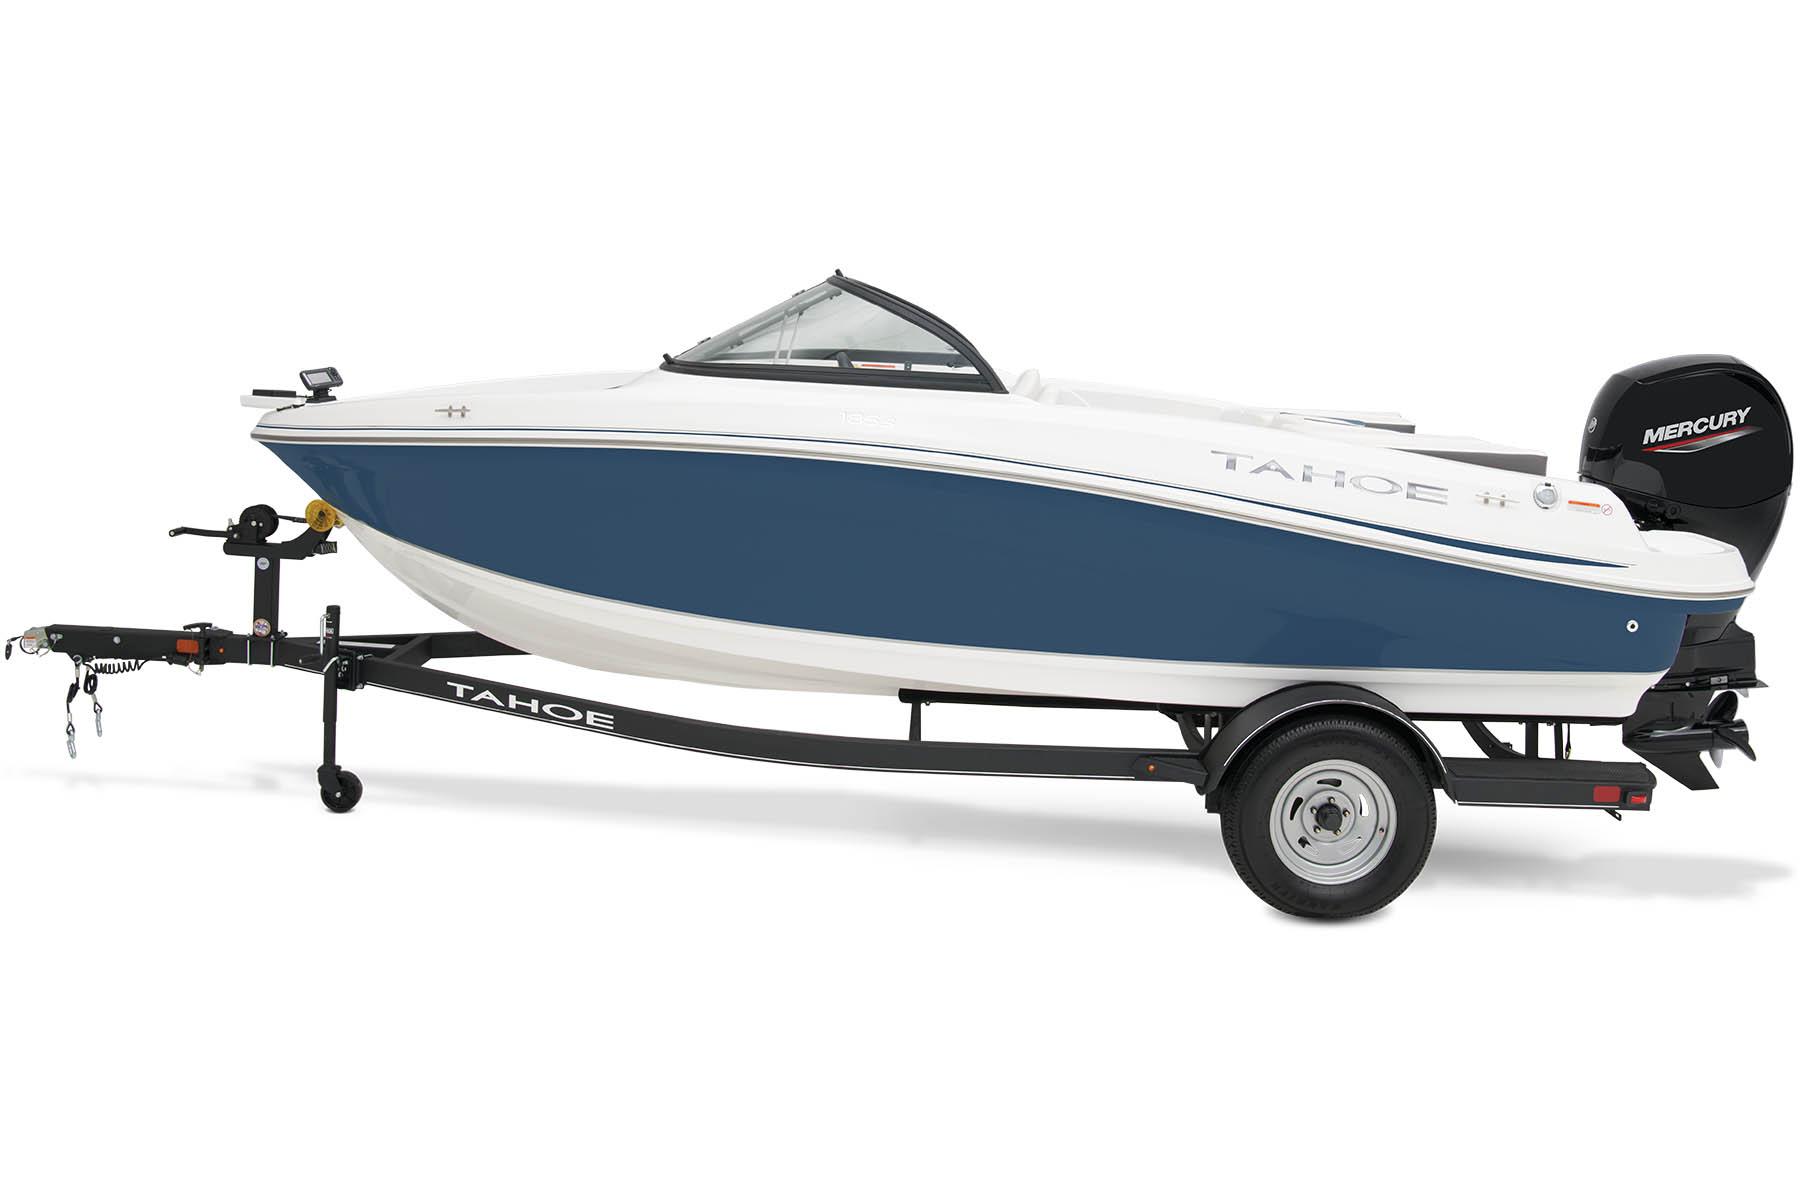 New 2023 Tahoe 185 S, 25535 Lavalette - Boat Trader